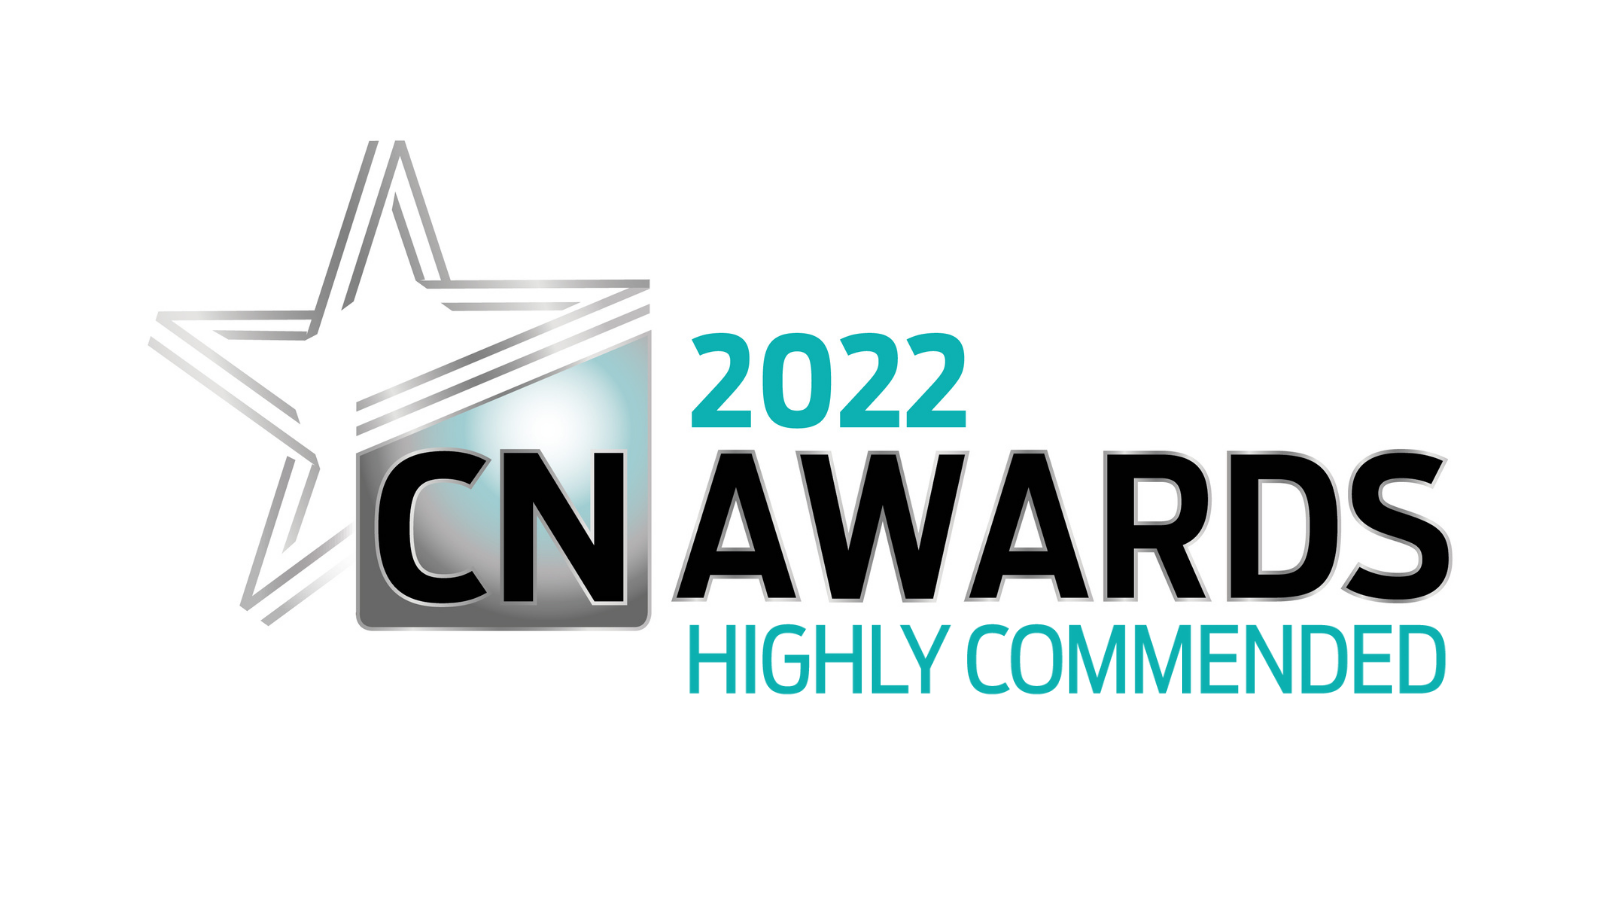 CN Awards Highly Commended logo.